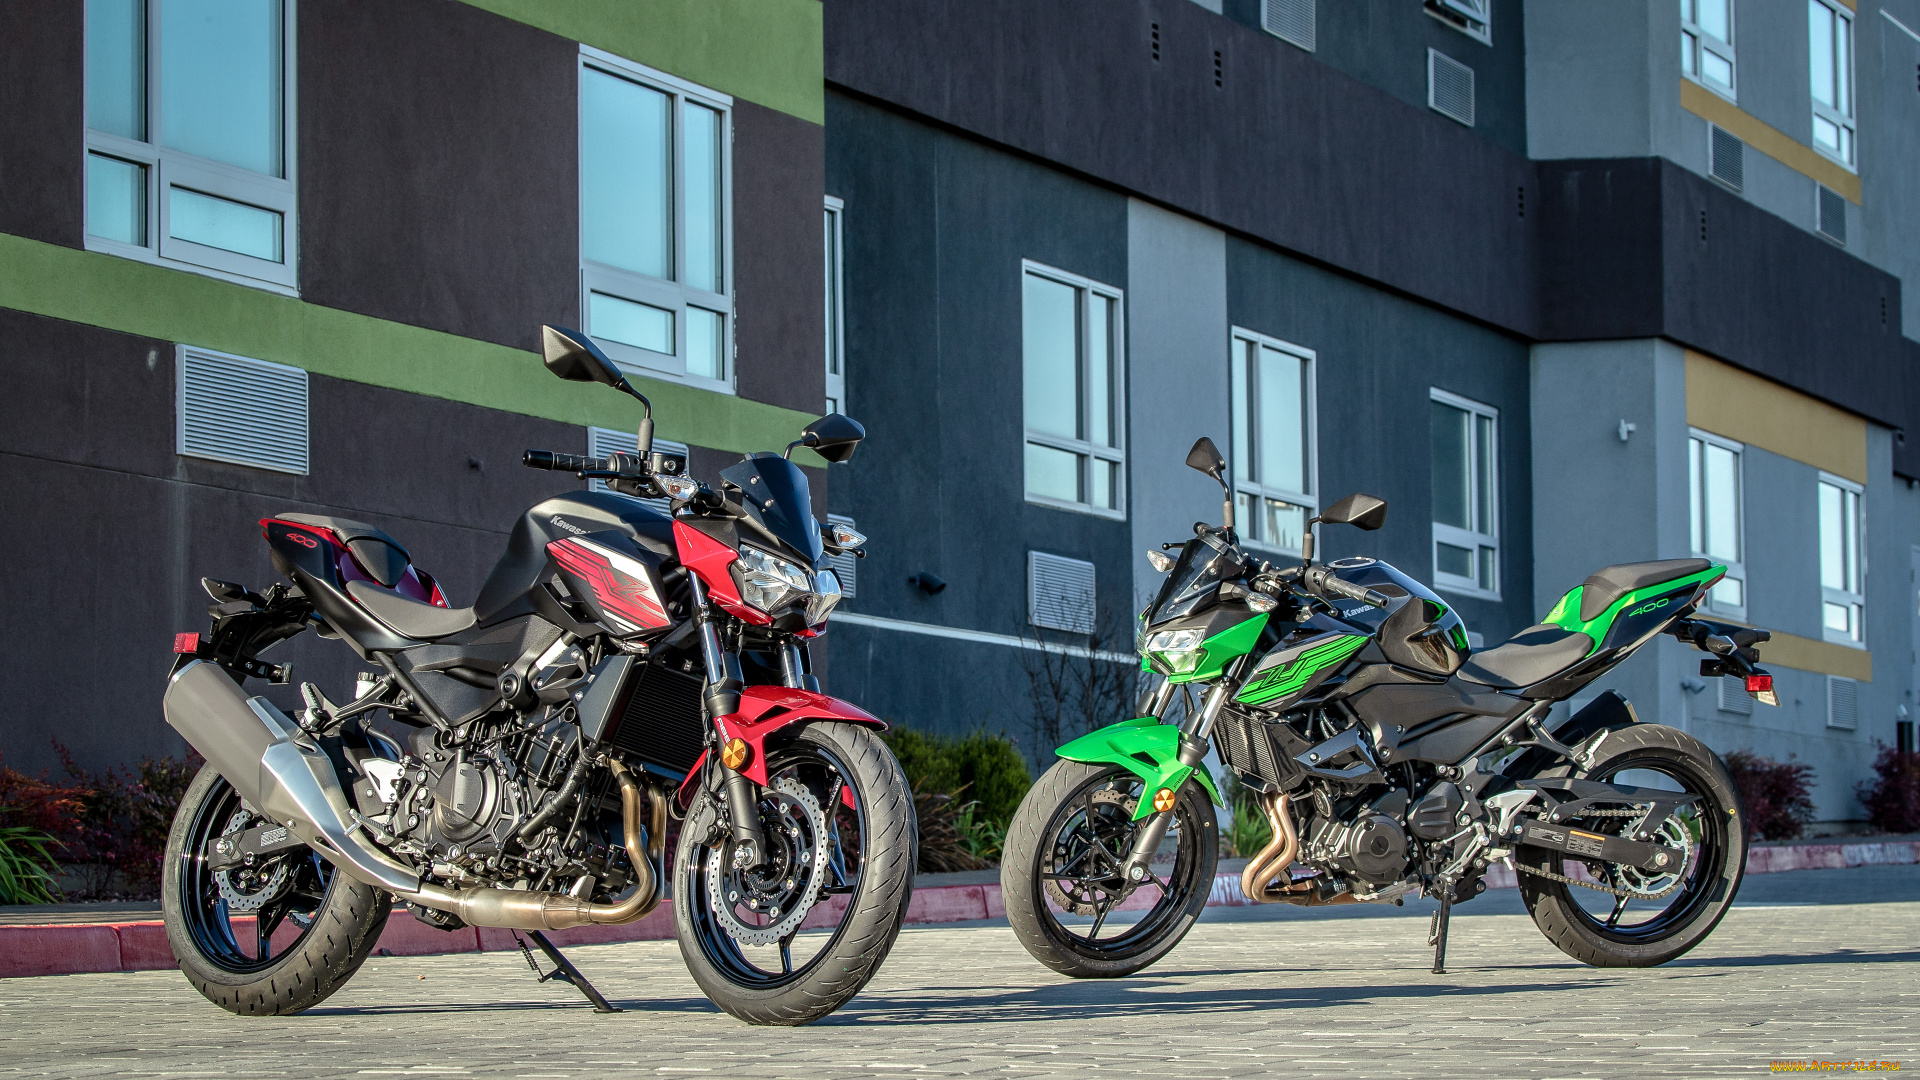 2019, kawasaki, z400, мотоциклы, kawasaki, японские, z400, парковка, 2019, два, мотоцикла